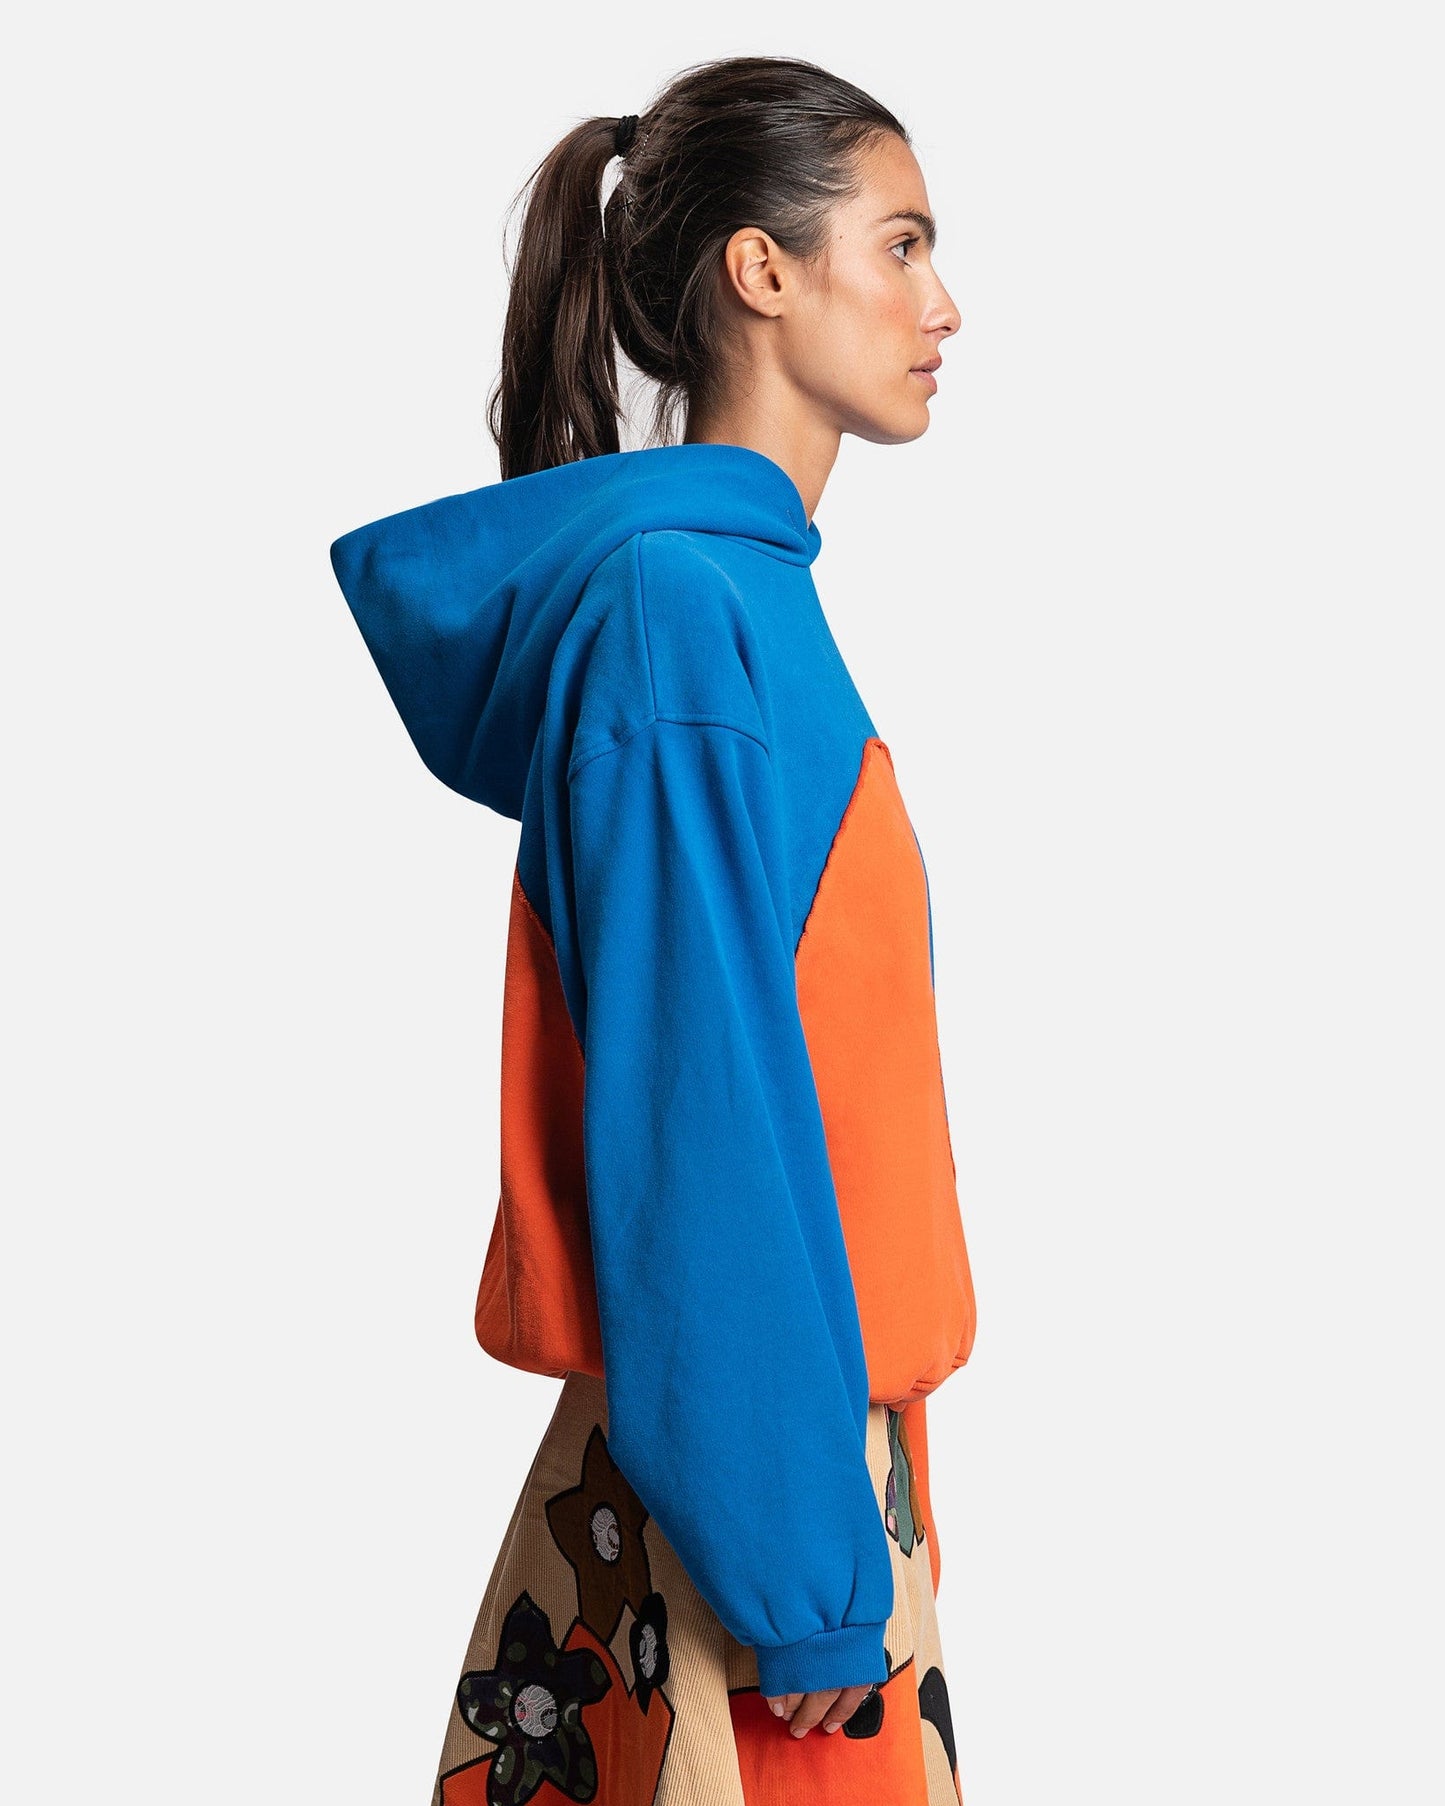 ERL Men's Sweatshirts Copy of Unisex Swirl Fleece Hoodie Jersey in Blue/Orange